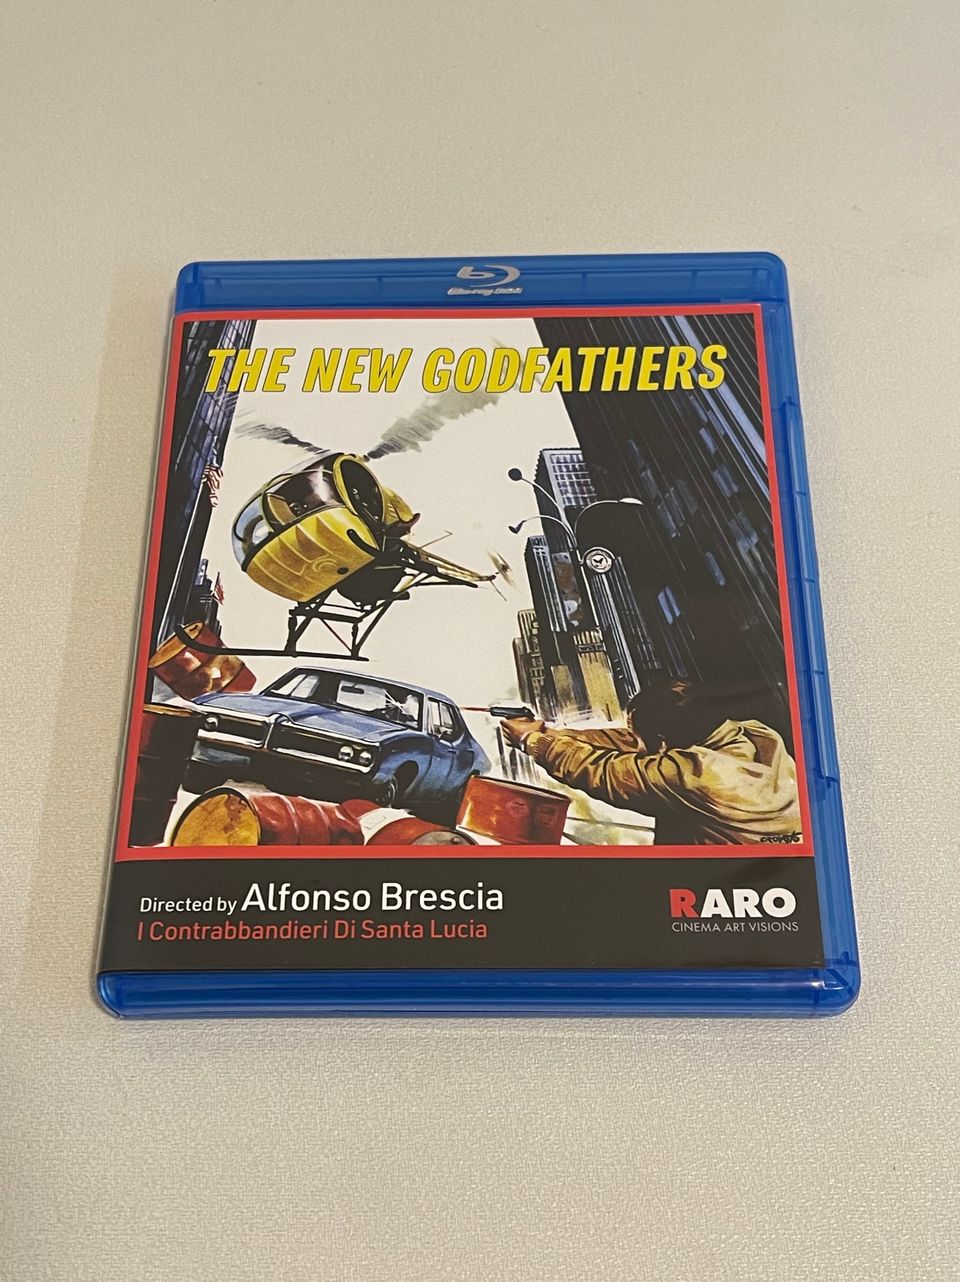 The New Godfathers (1979) Raro Blu-ray